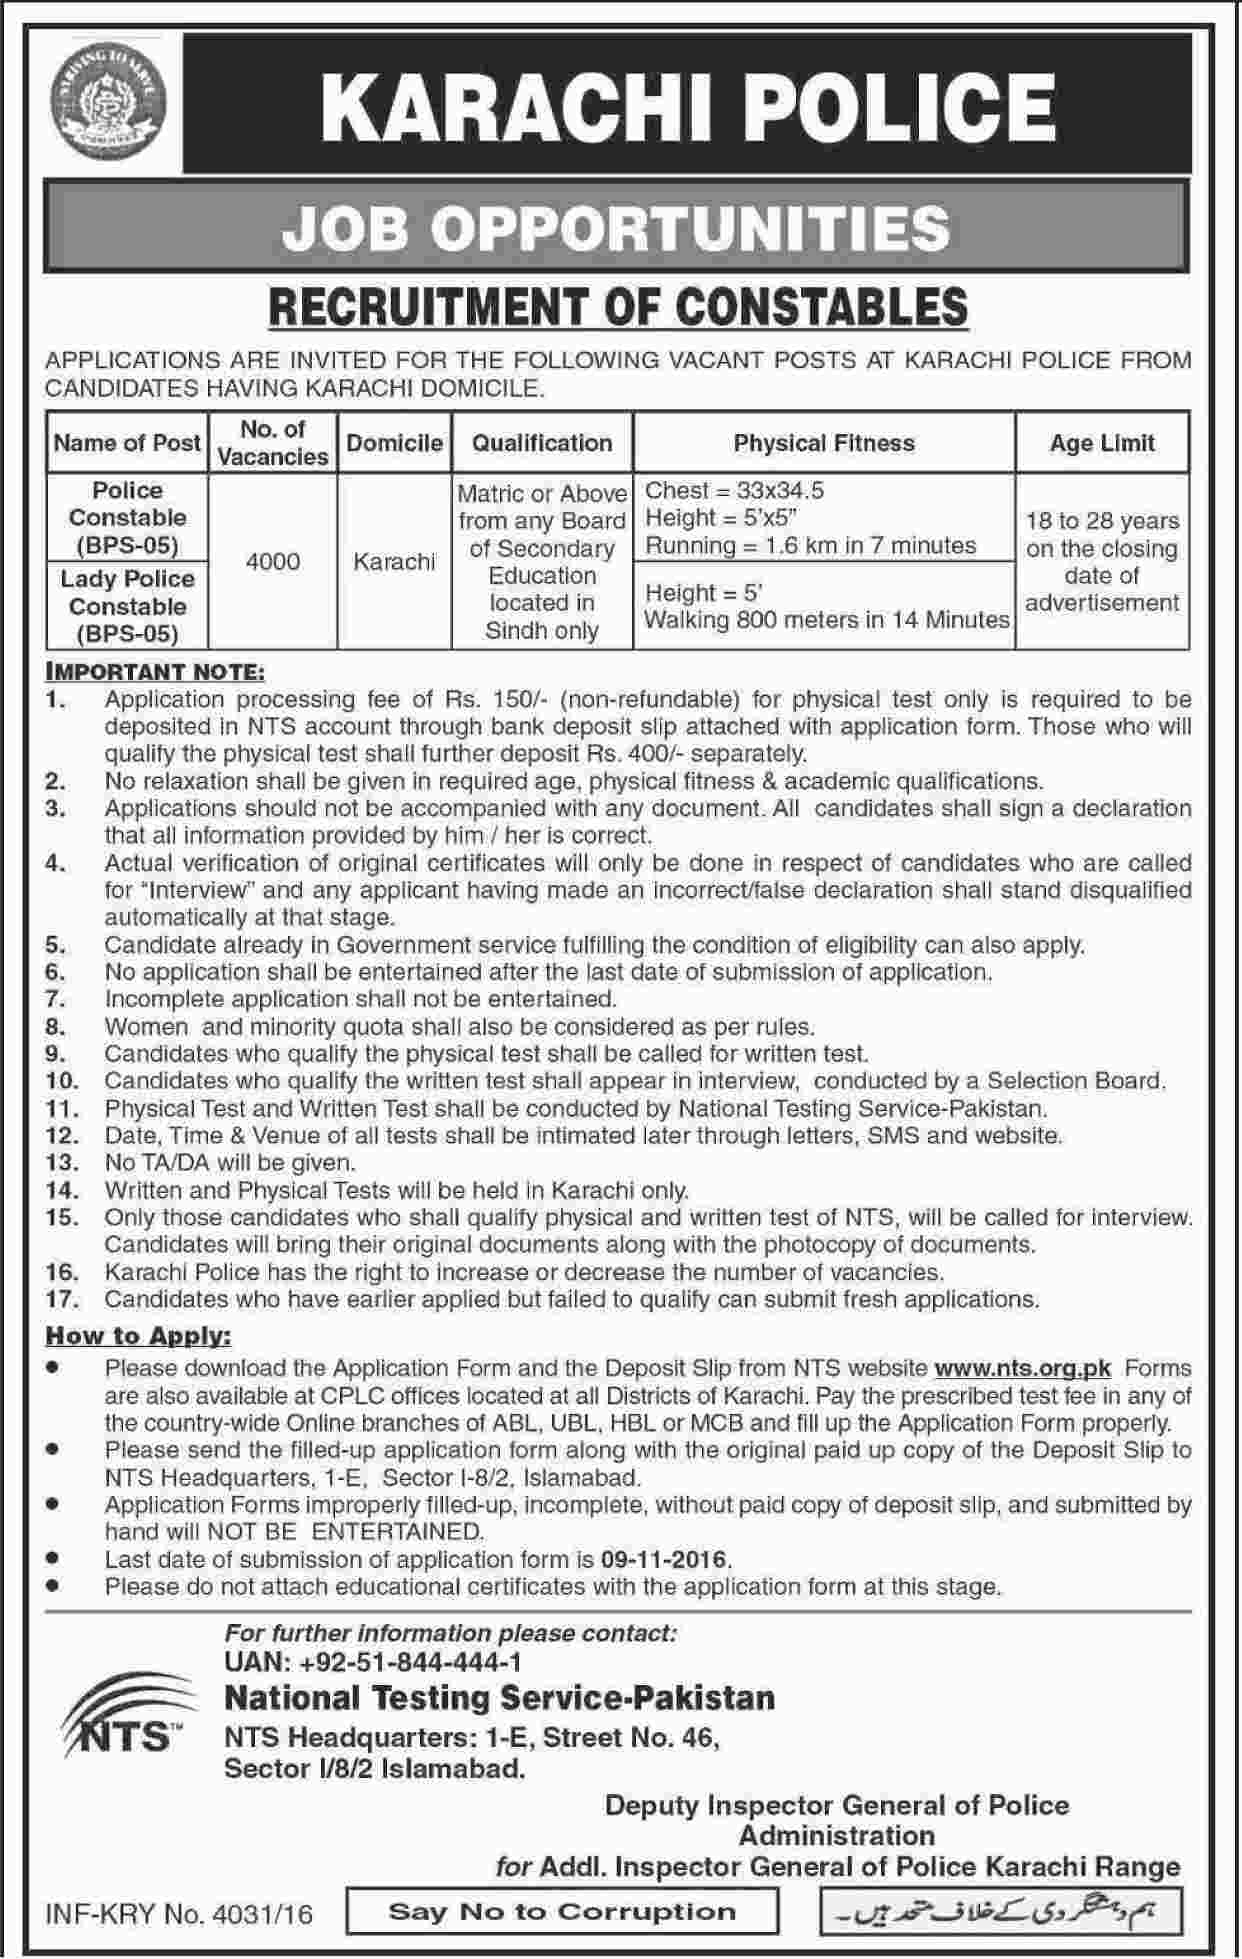 Karachi Police Constable Lady Constable Jobs 2020 NTS Form Download